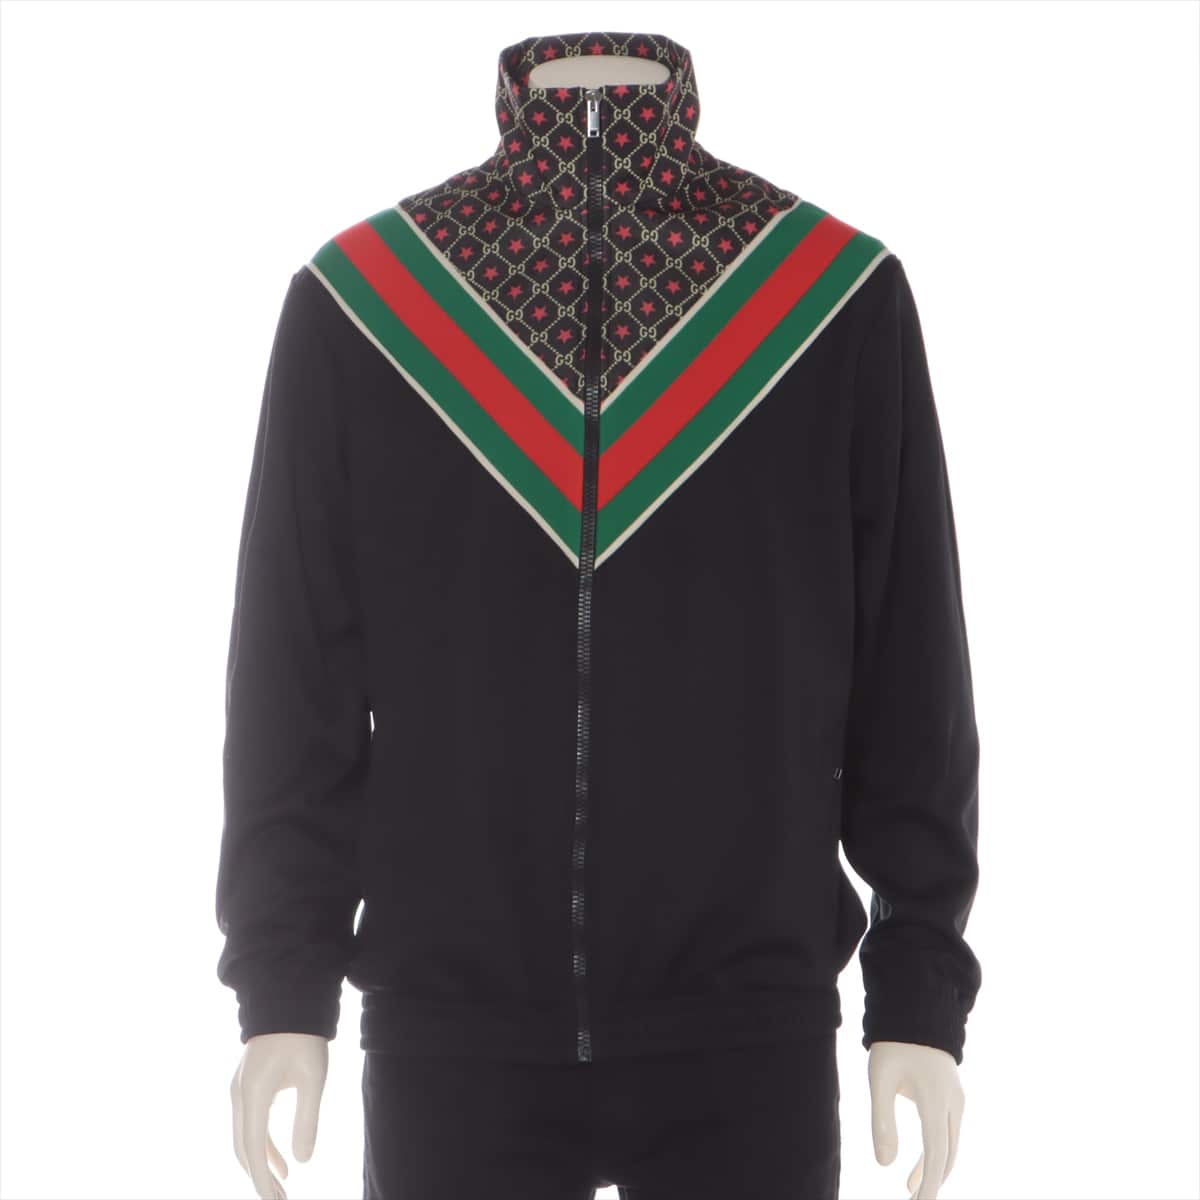 Gucci GG Star Cotton & polyester Sweatsuit XS Men's Black